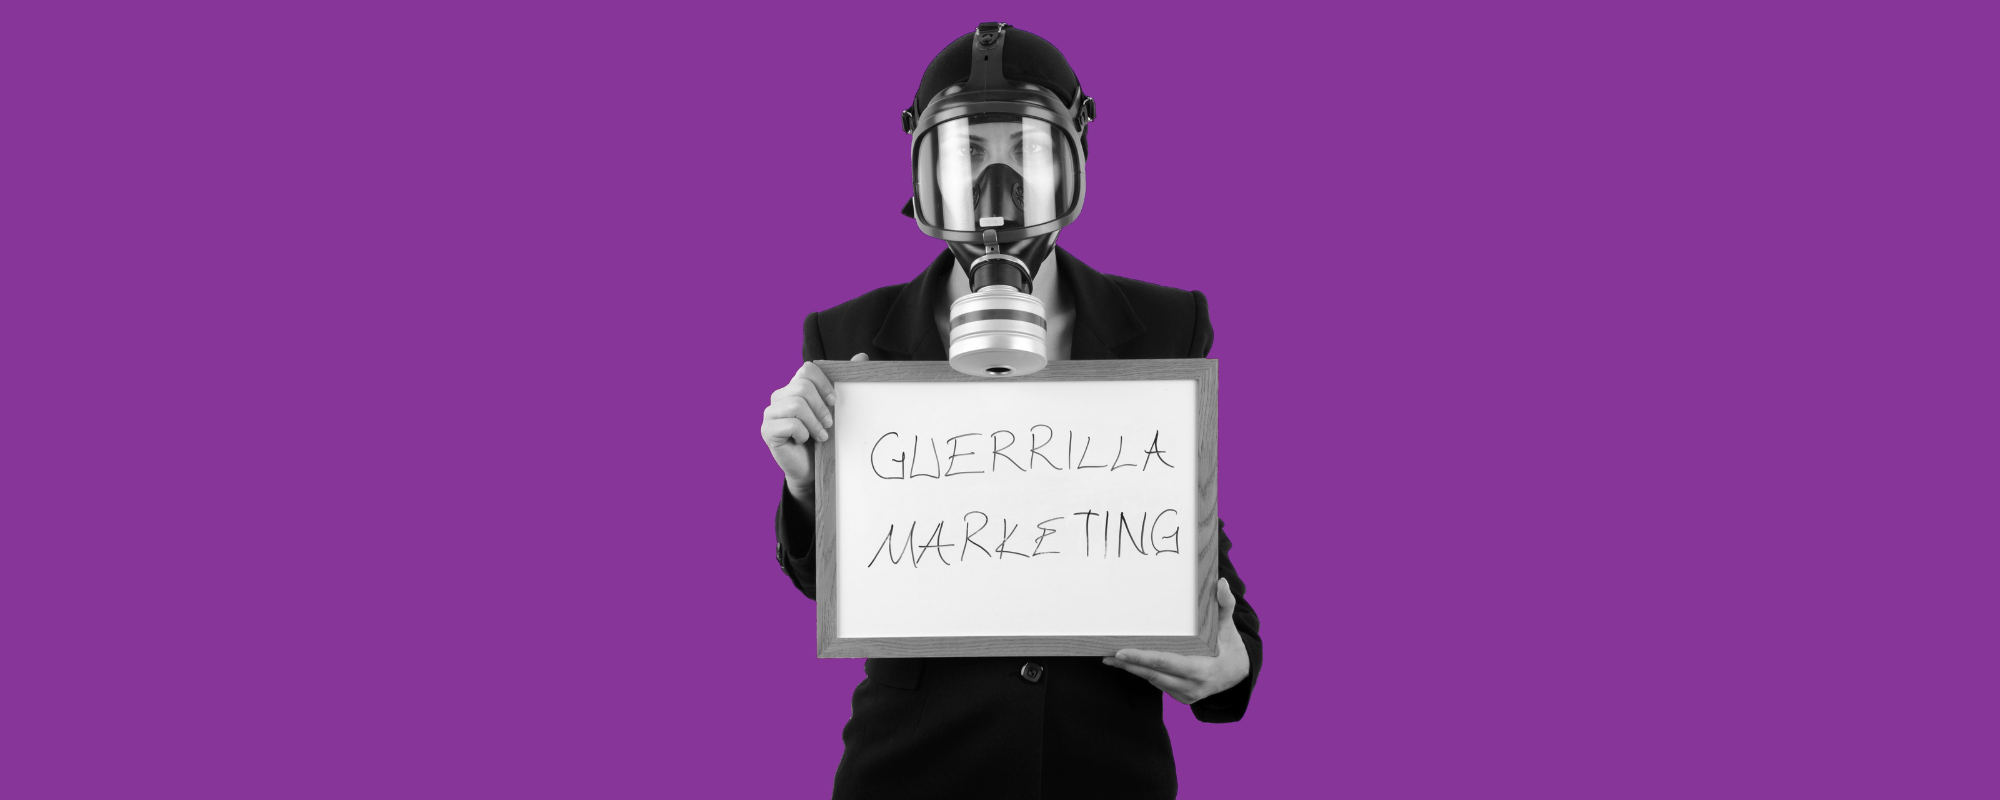 Gerilla marketing